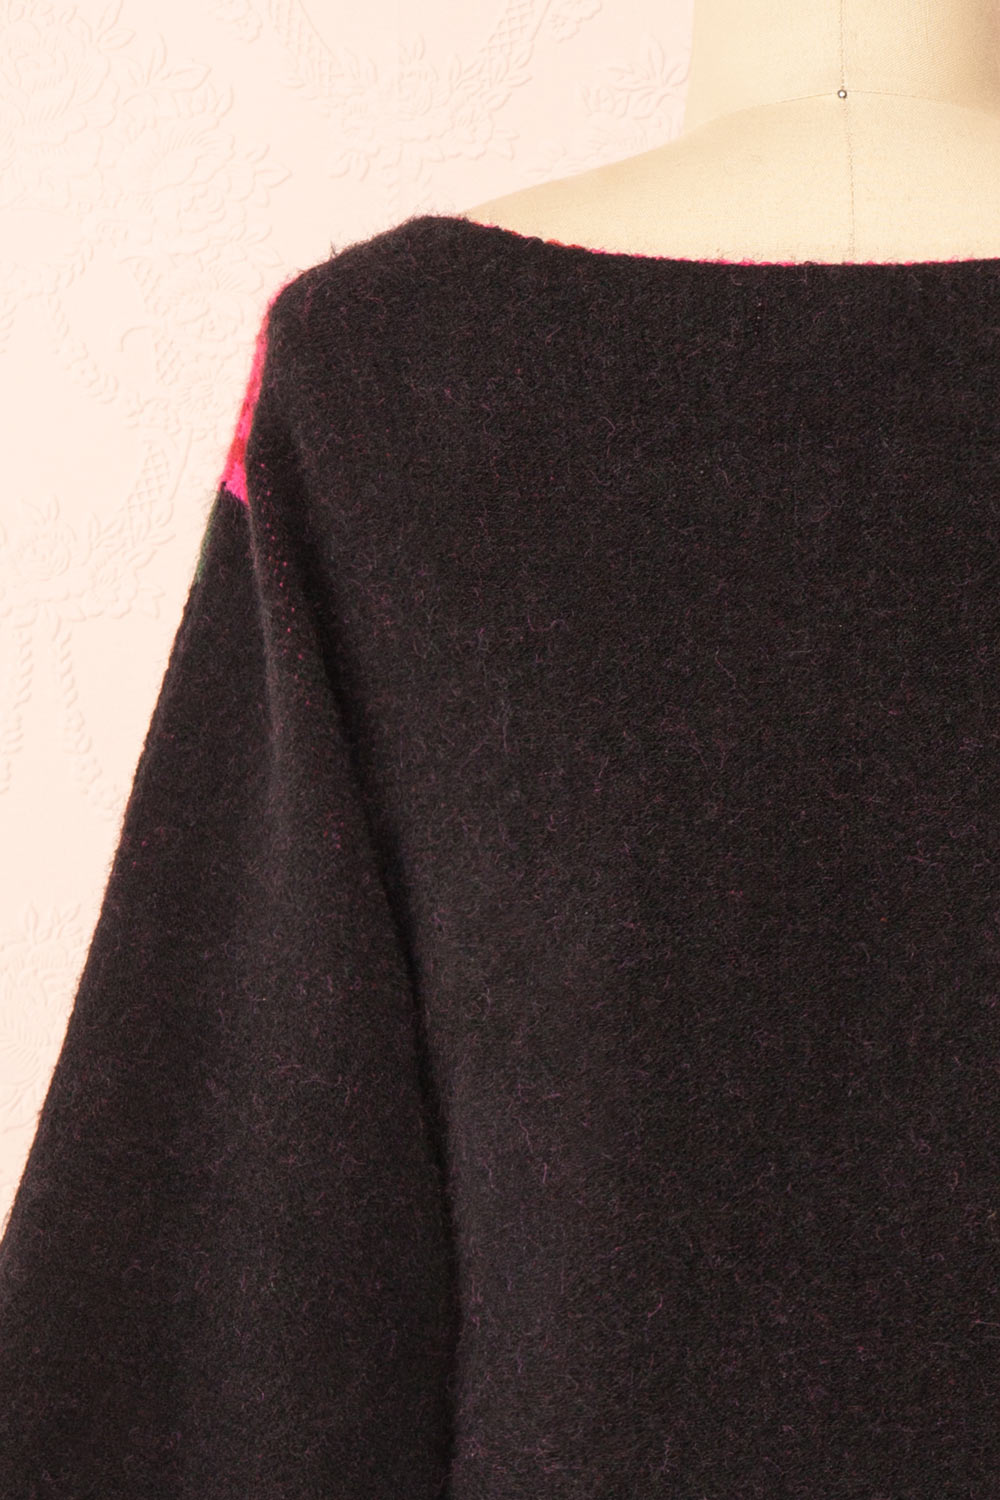 Hargeisa Black Knit Sweater w/ Boat Neckline | Boutique 1861 back close-up